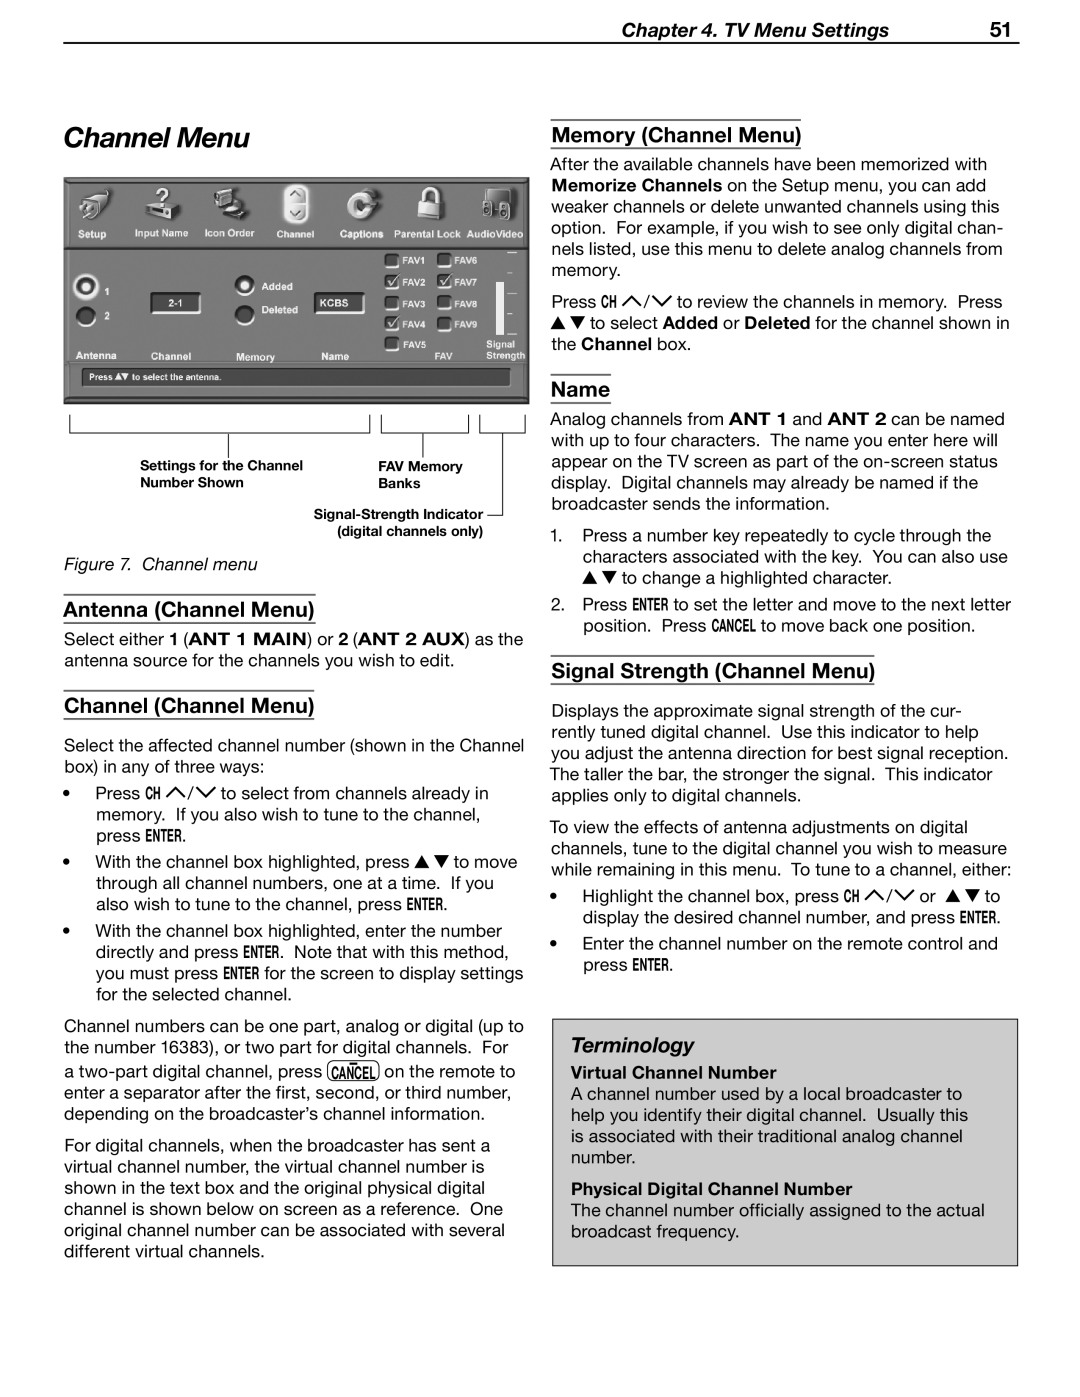 Mitsubishi Electronics LT-37131 Antenna Channel Menu, Channel Channel Menu, Memory Channel Menu, Name, Terminology 